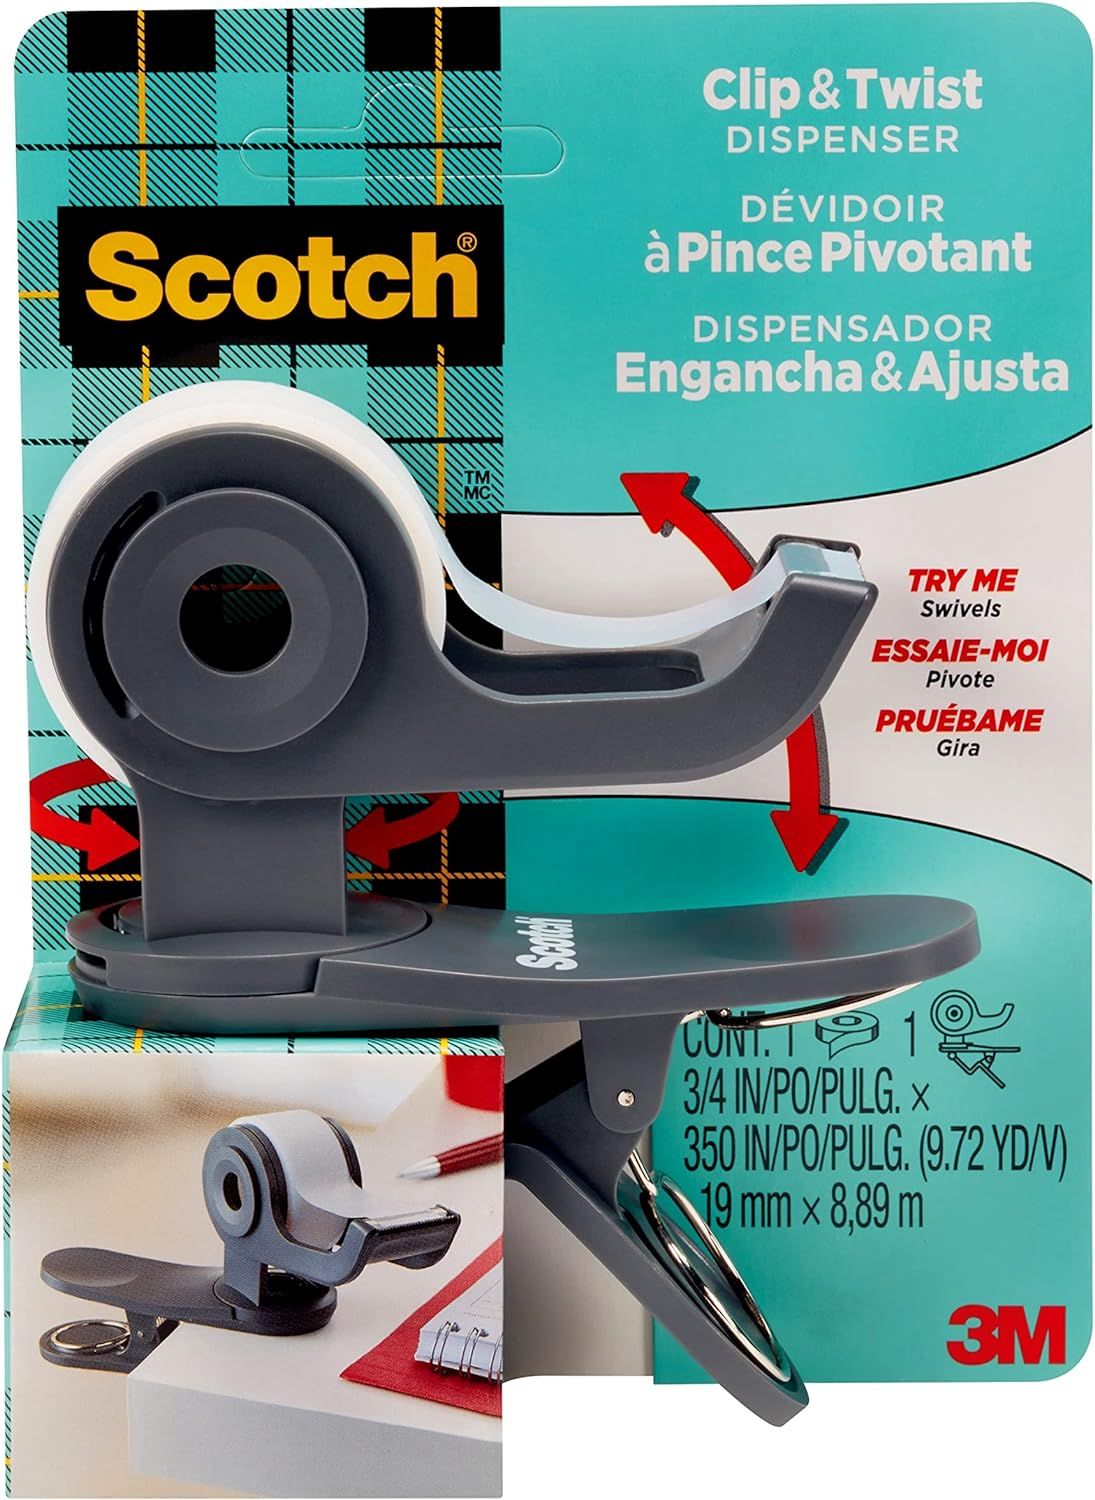 Scotch Desktop Tape Dispenser, Great for Gift Wrapping, 1 Dispenser (C19-CLIP-CCW),Black | Amazon (US)